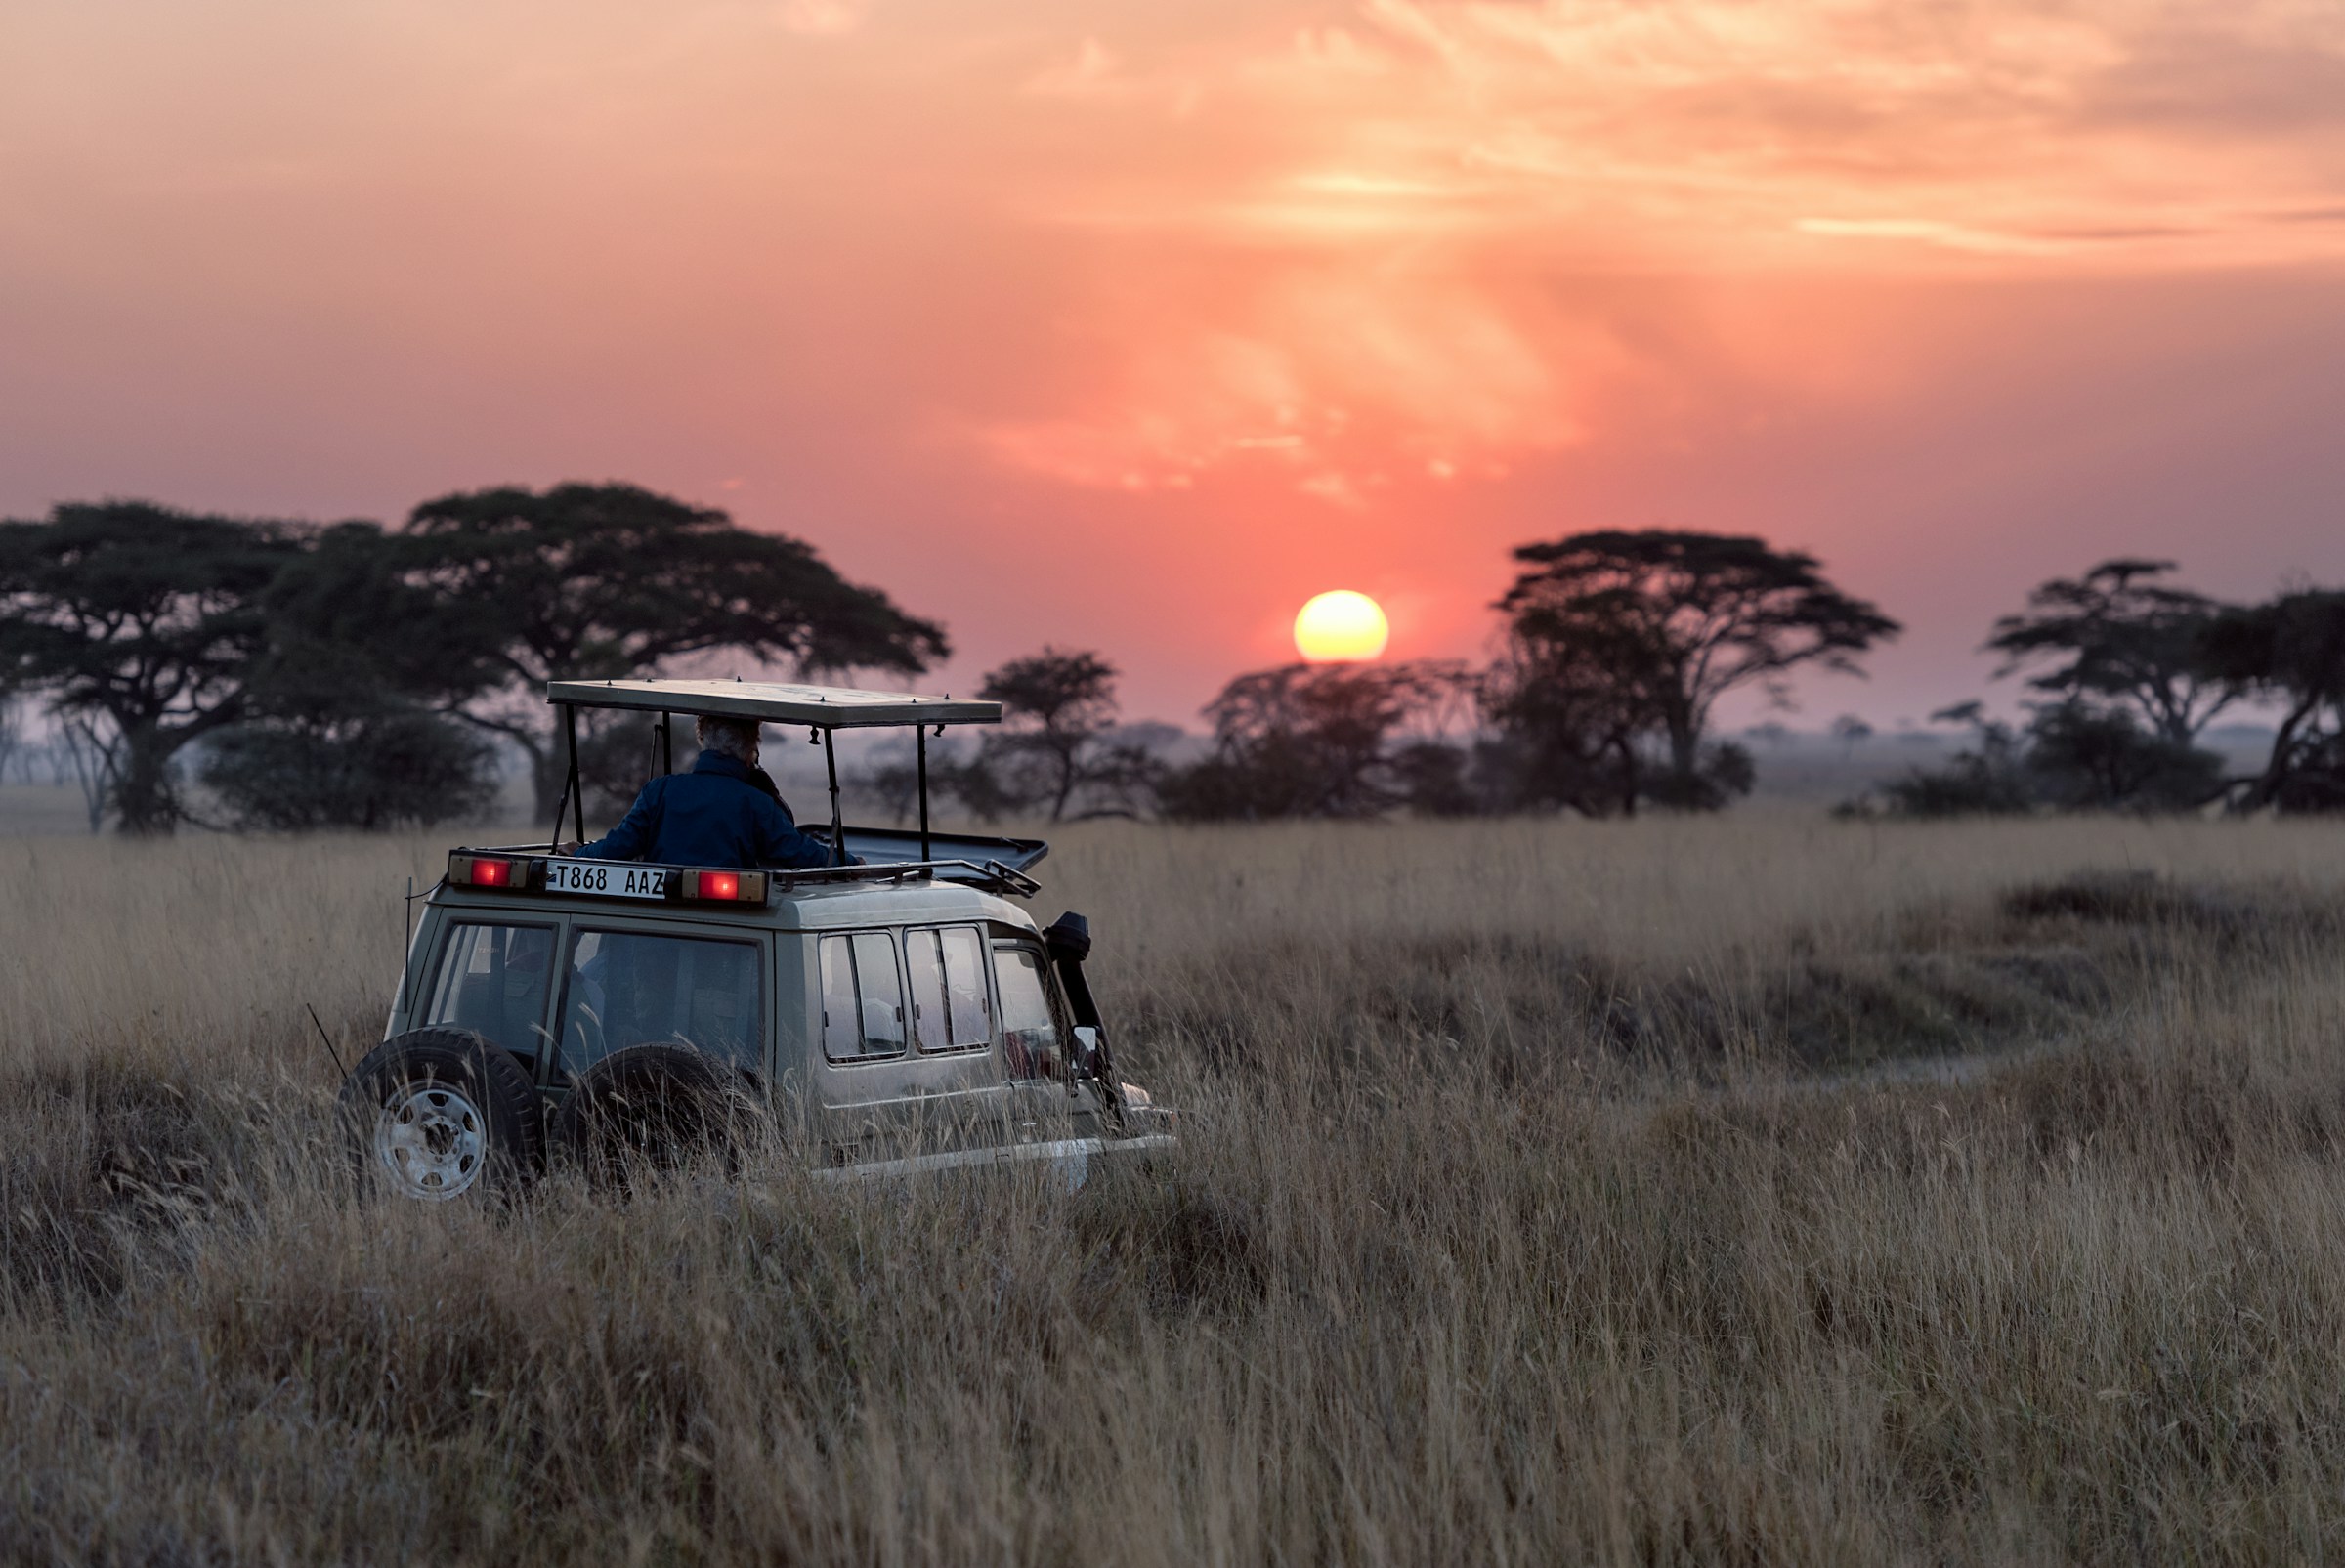 How to prepare for Tanzania wildlife safari